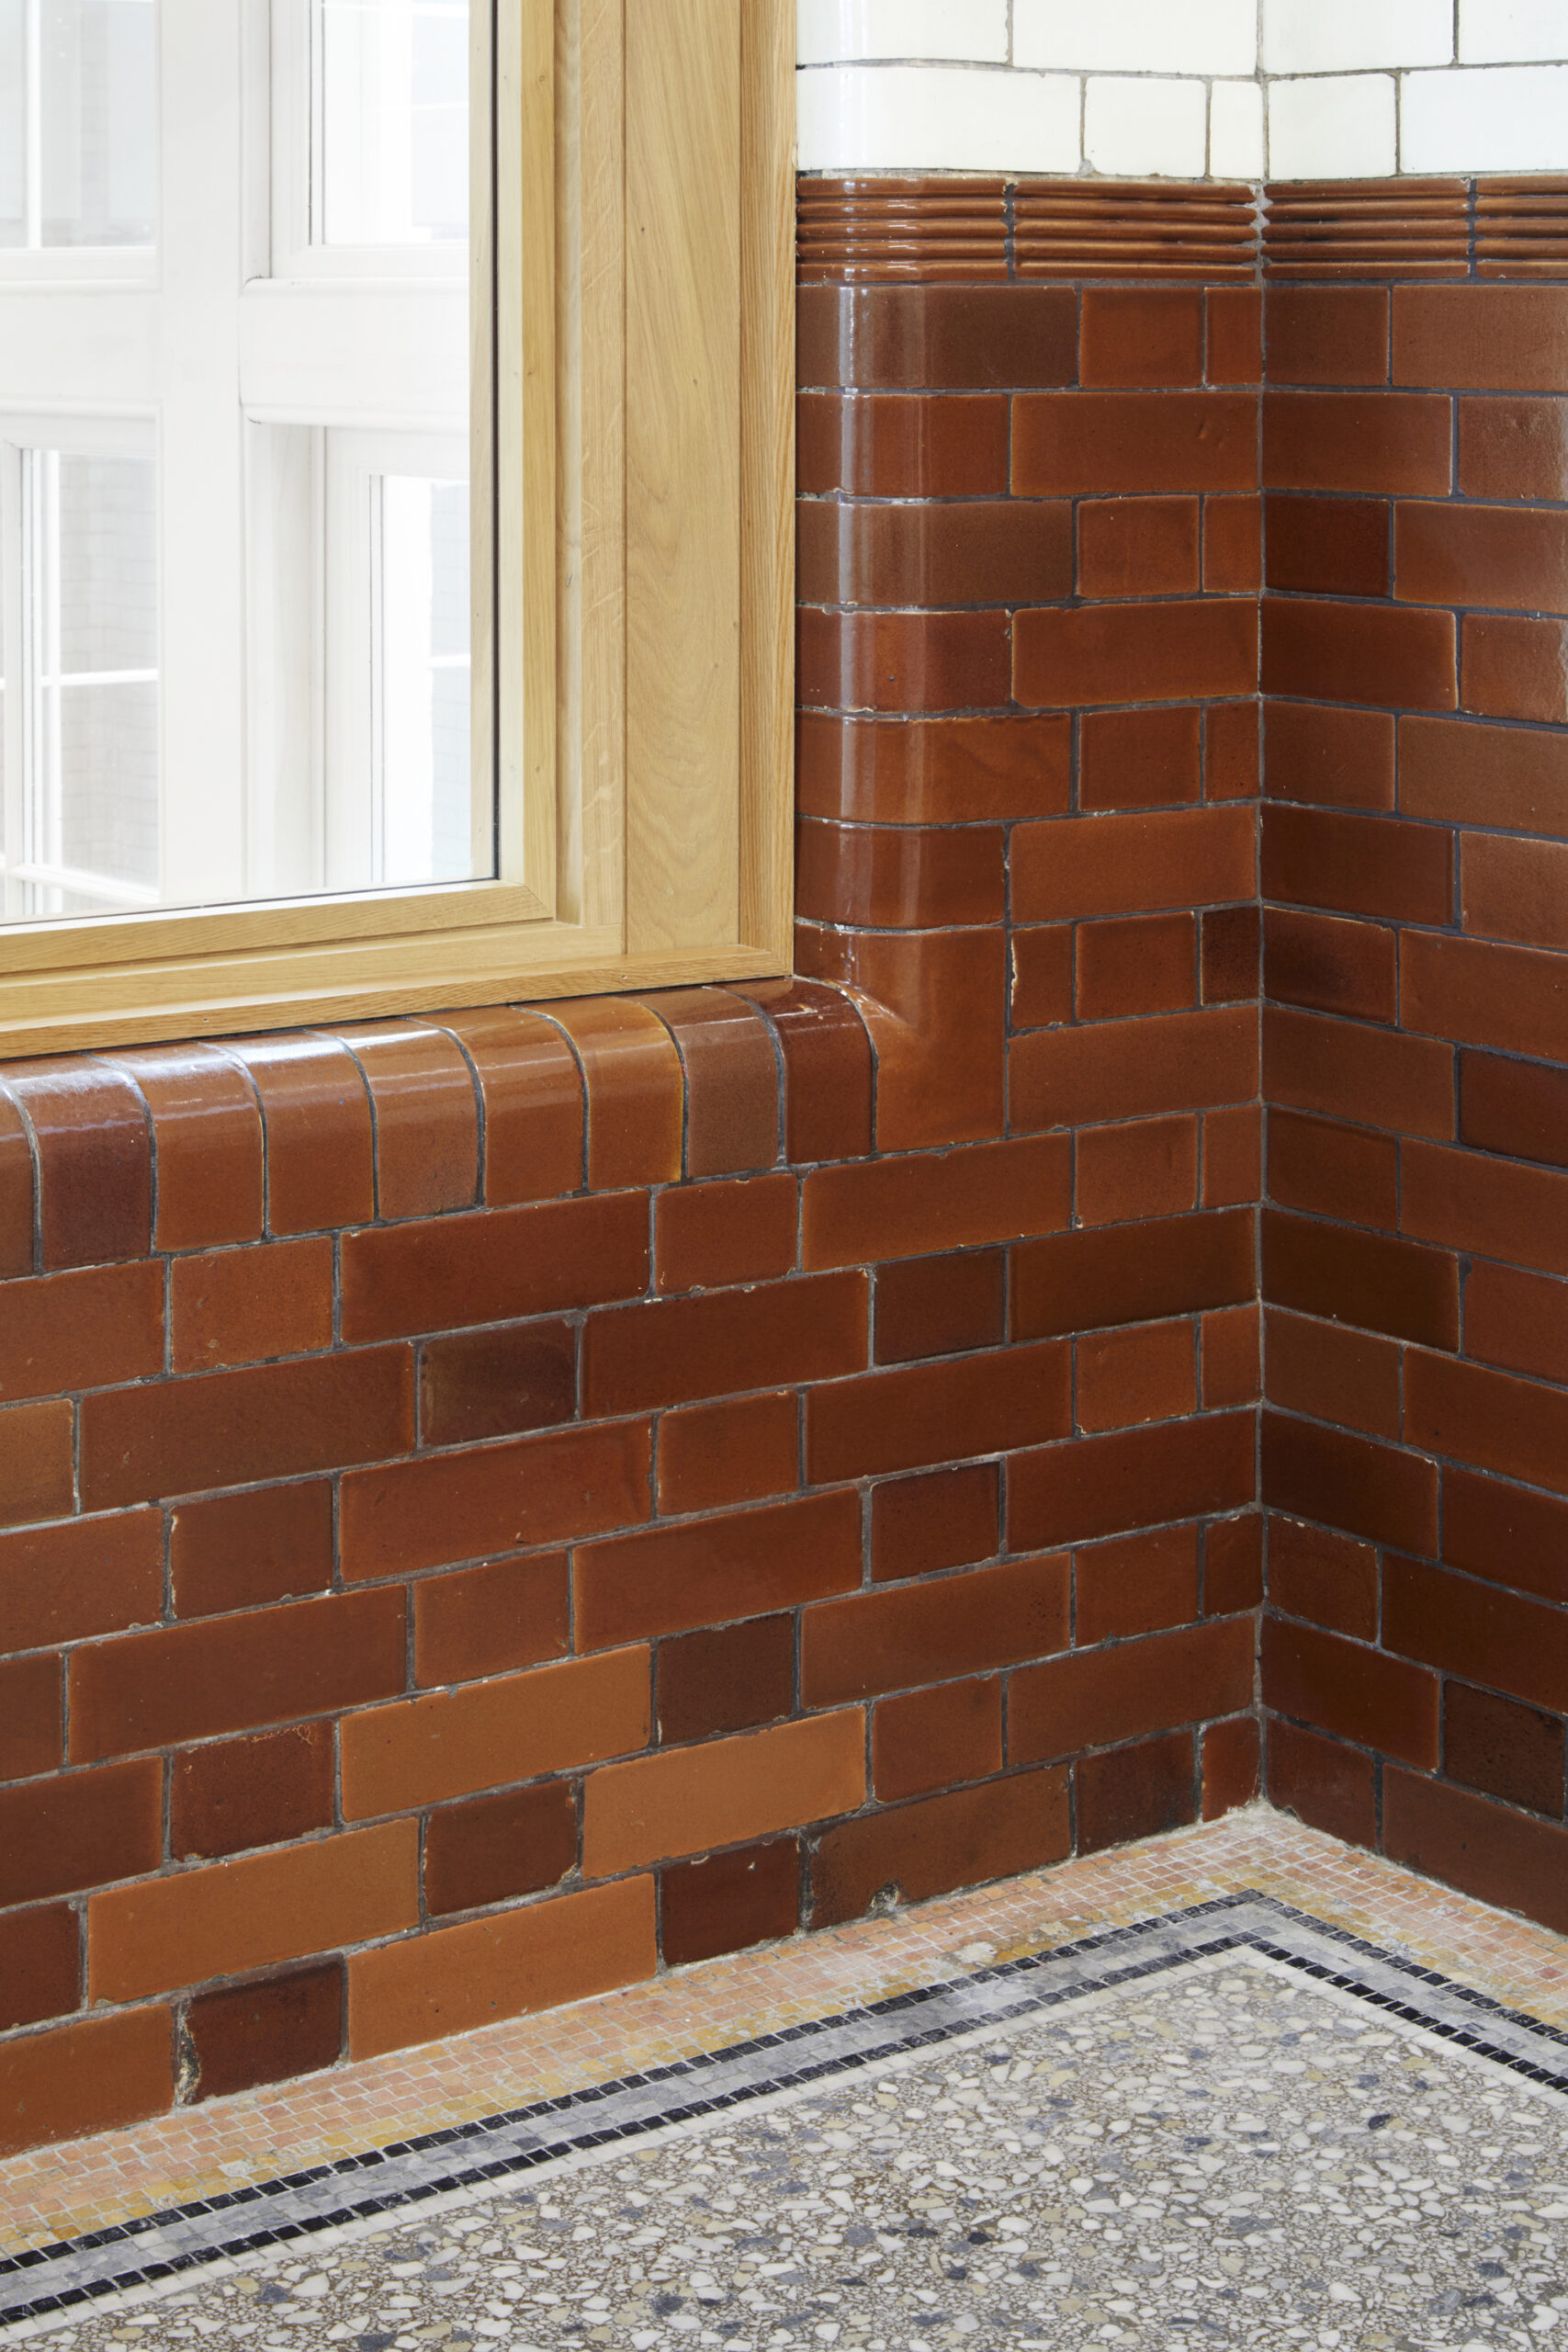 Interior detail shot of glazed bricks at Central Foundation Boys School